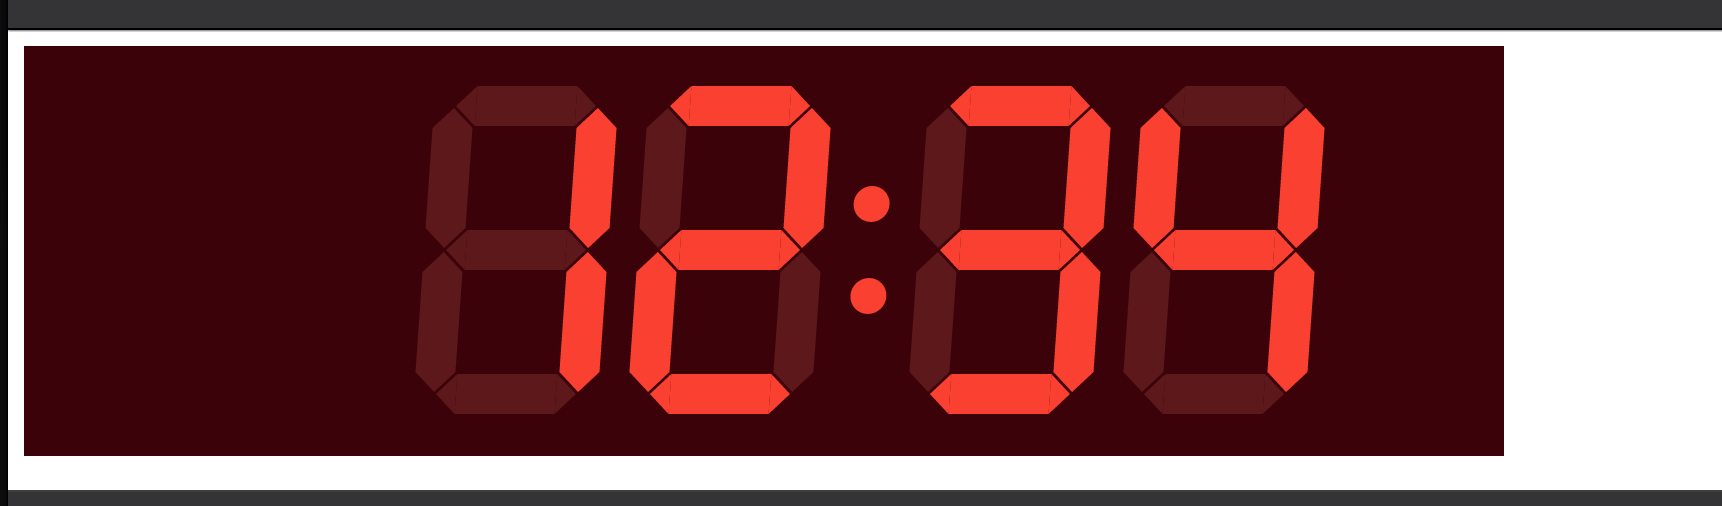 digital clock: LED numbers